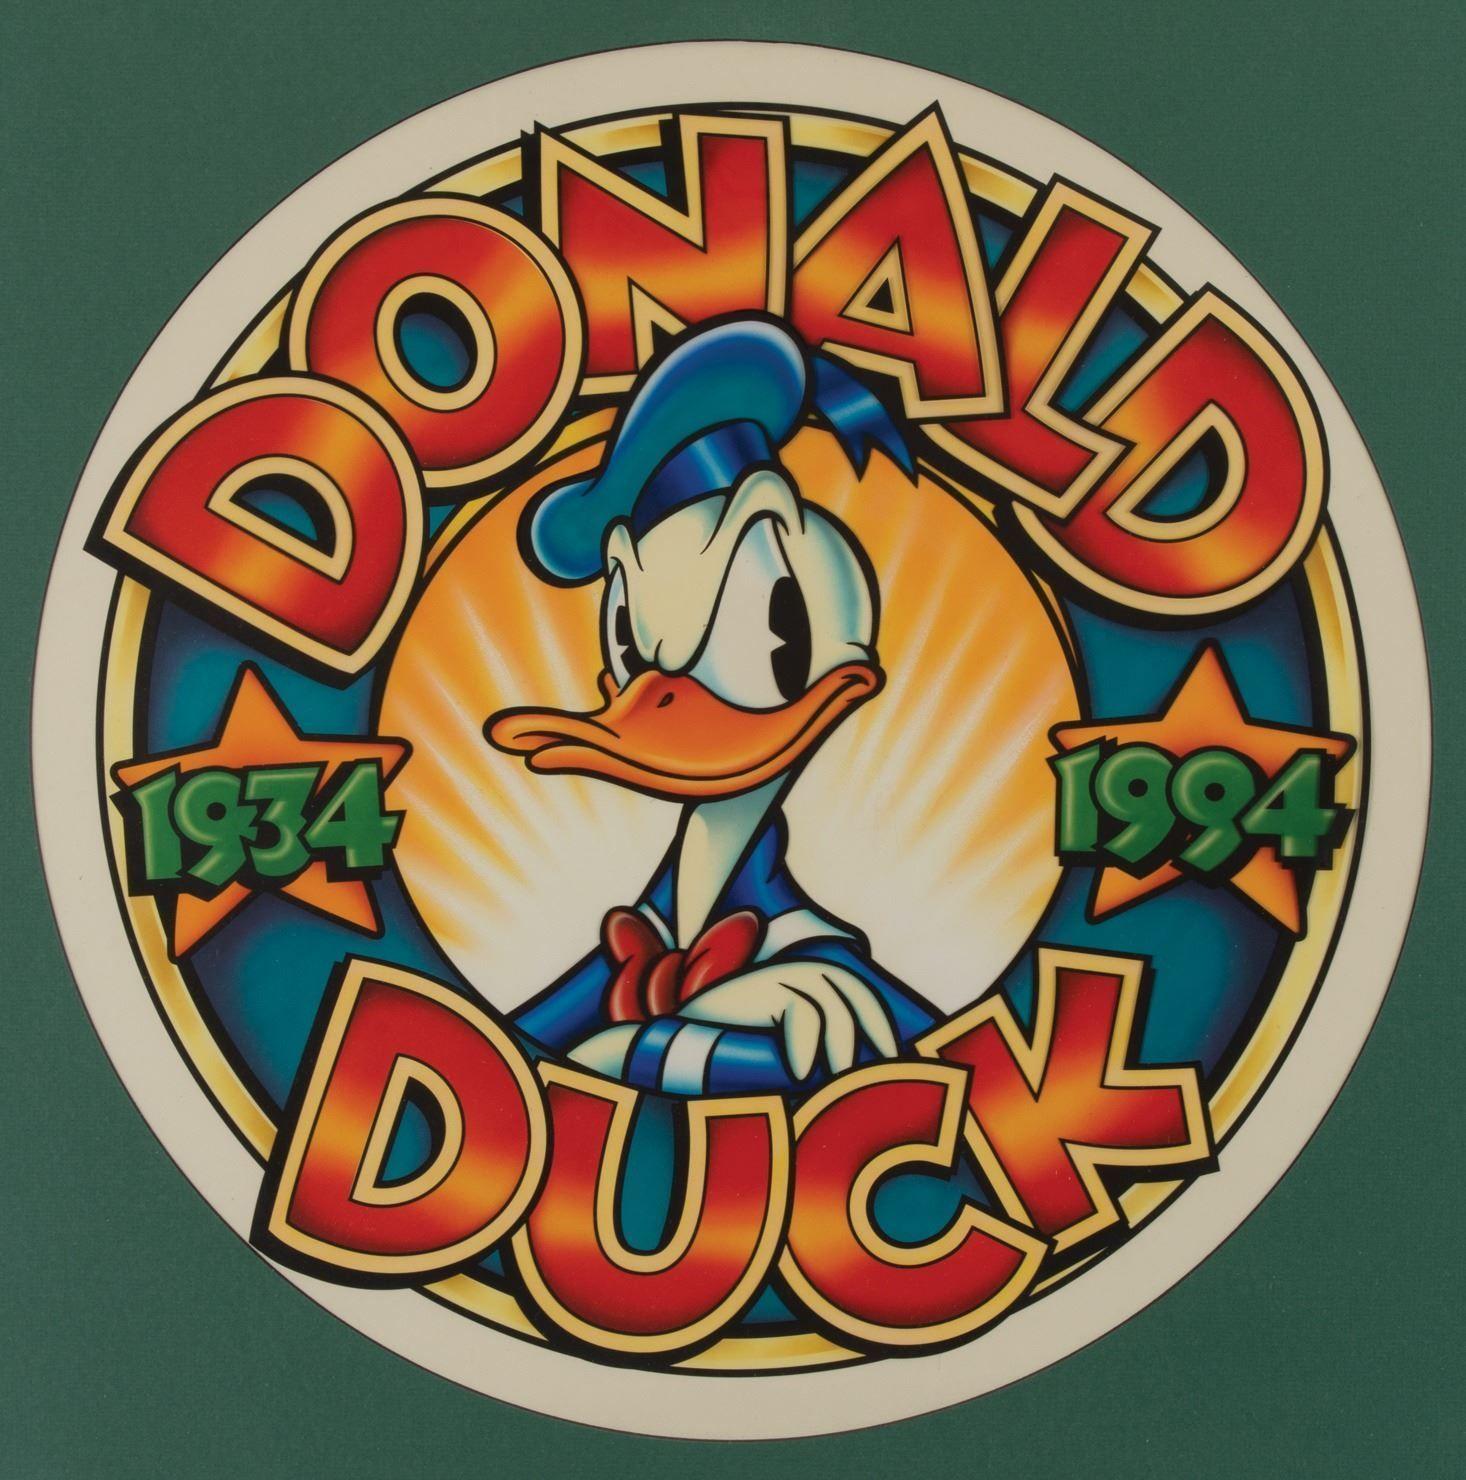 Donald Duck Logo - “Donald Duck” 60th Anniversary logo illustration art